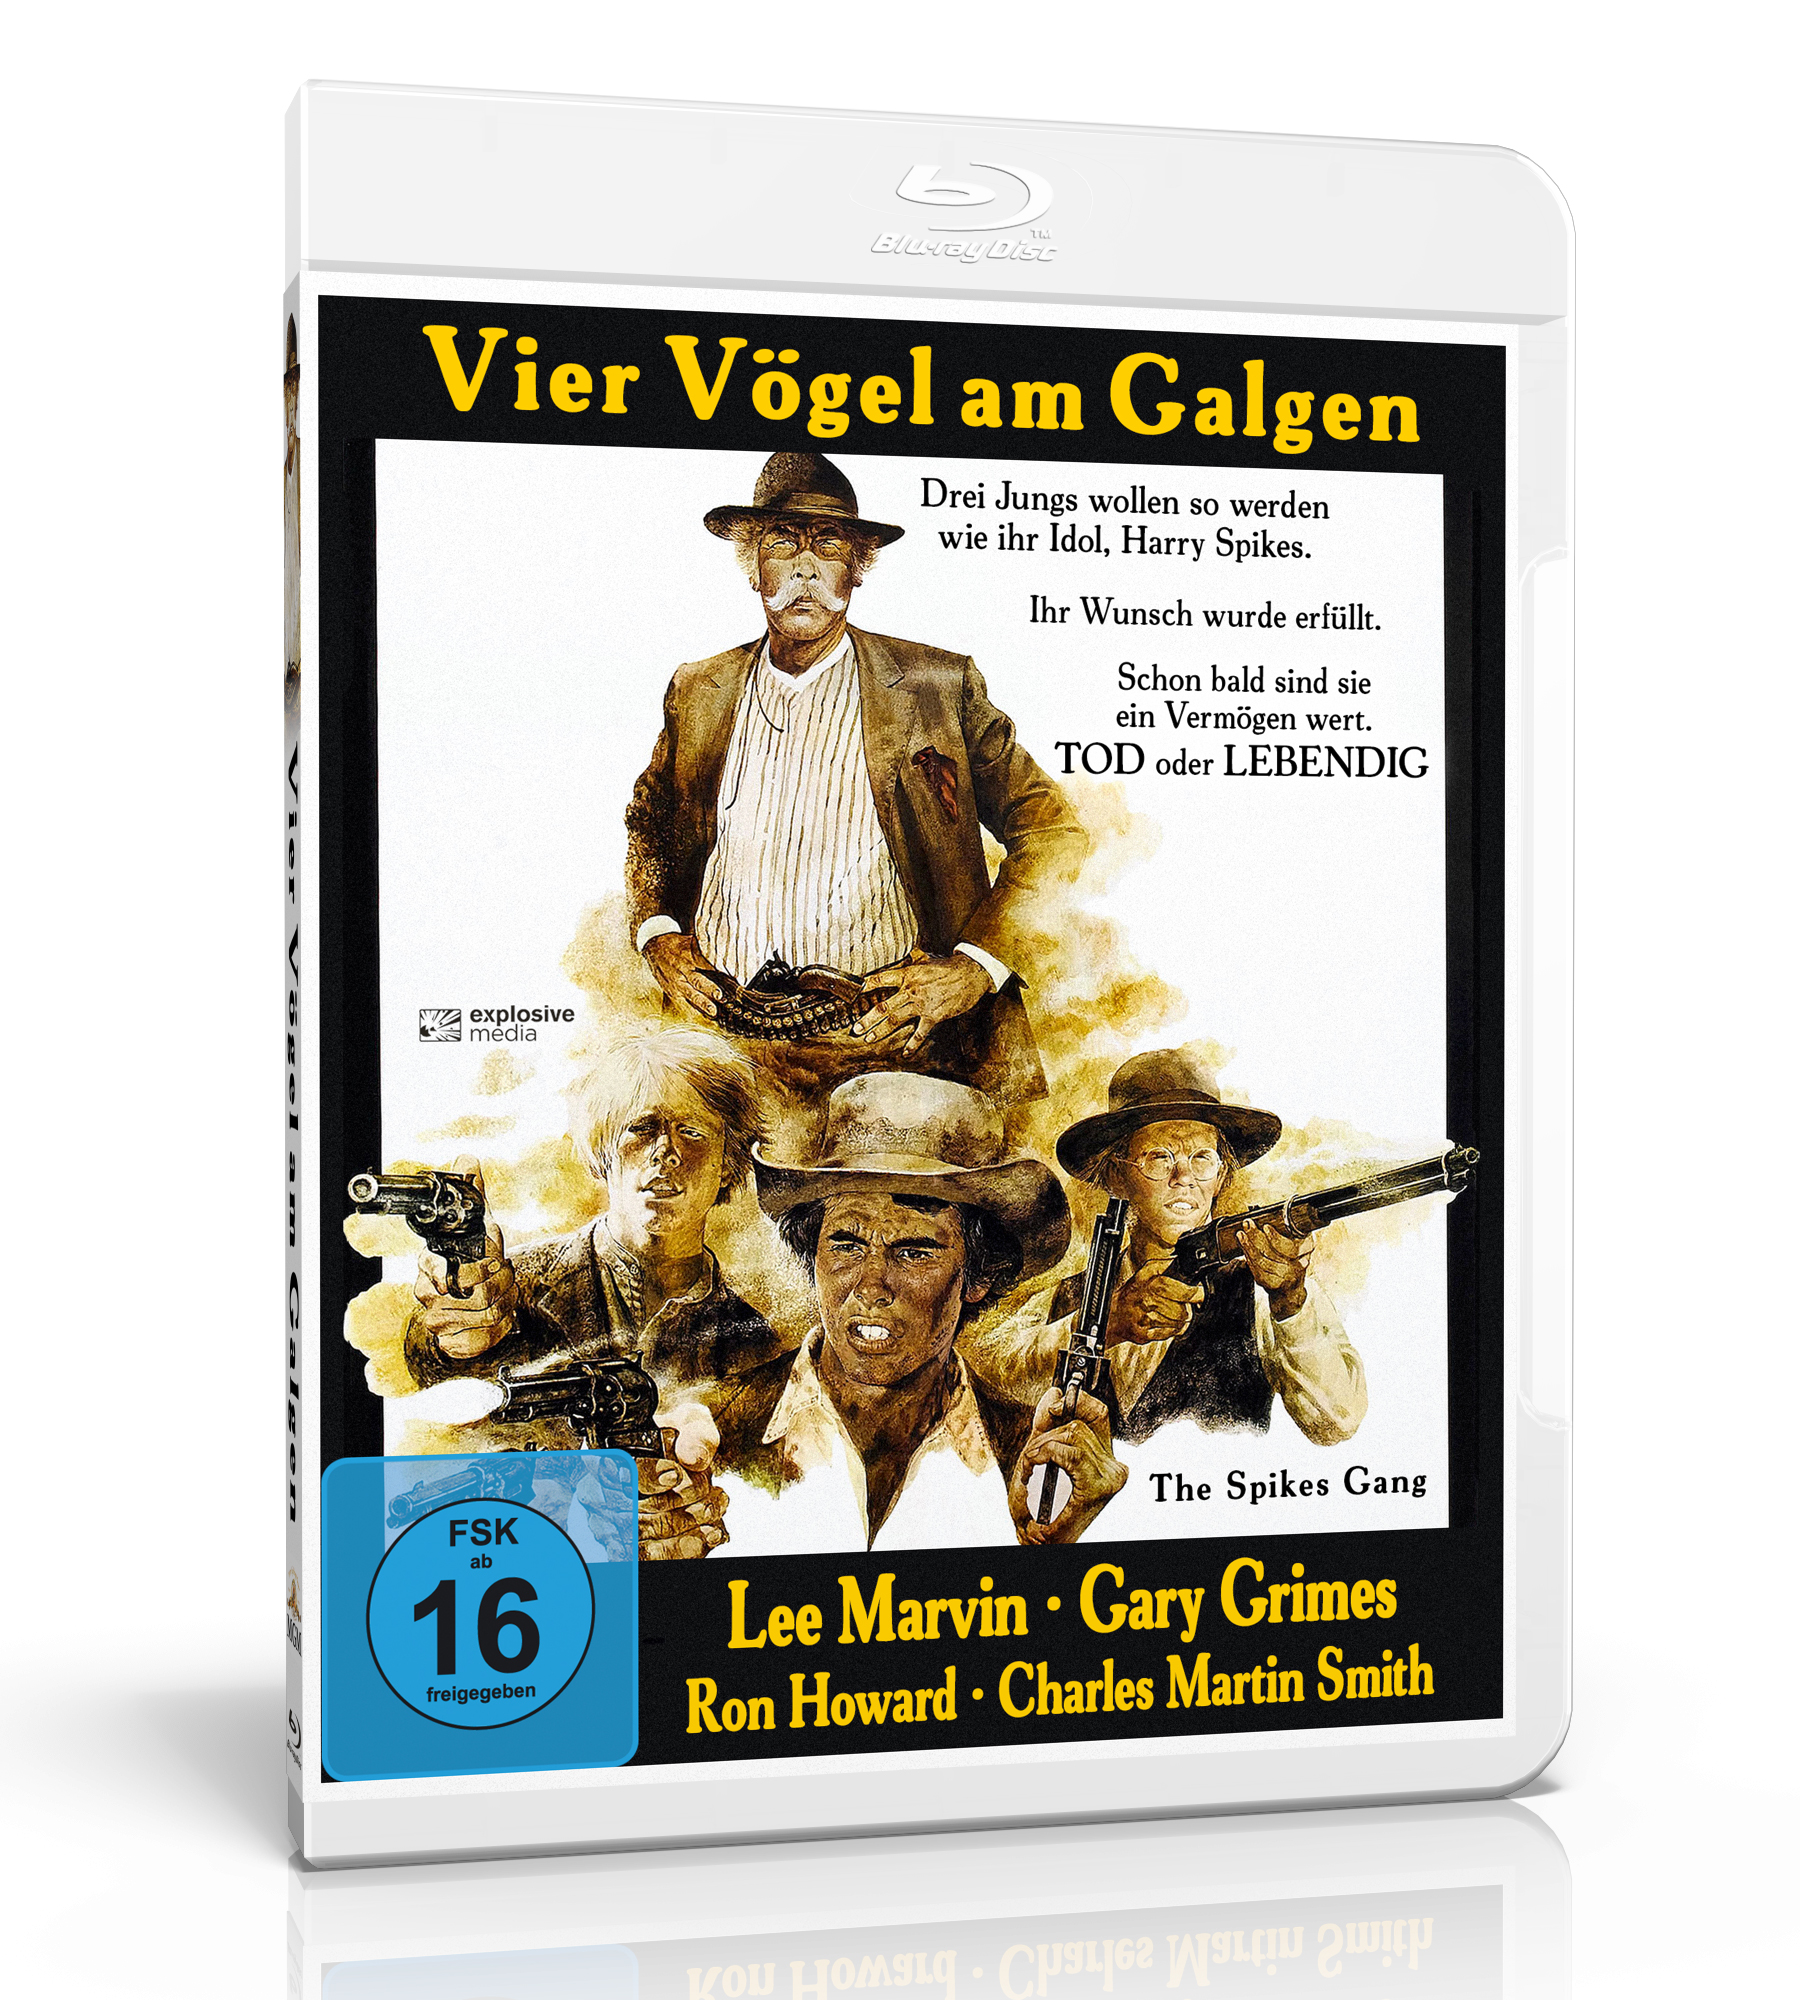 Vier Vögel am Galgen (The Spikes Gang) (Blu-Ray) - Explosive-Media GmbH